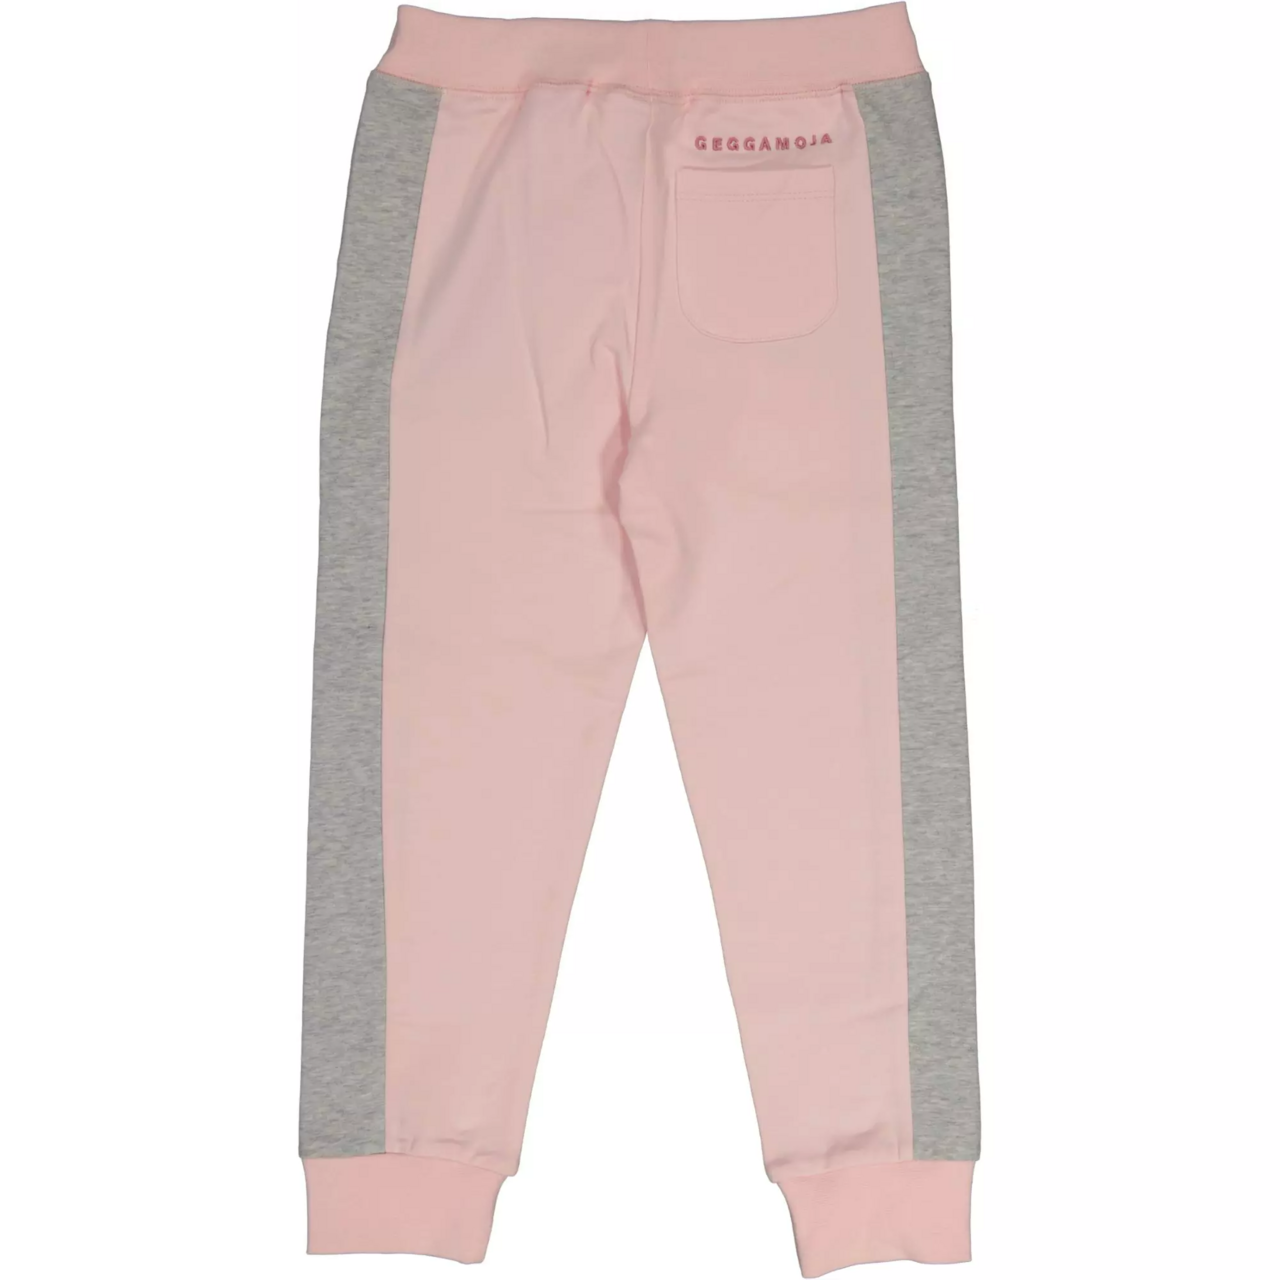 College pants Pink 98/104